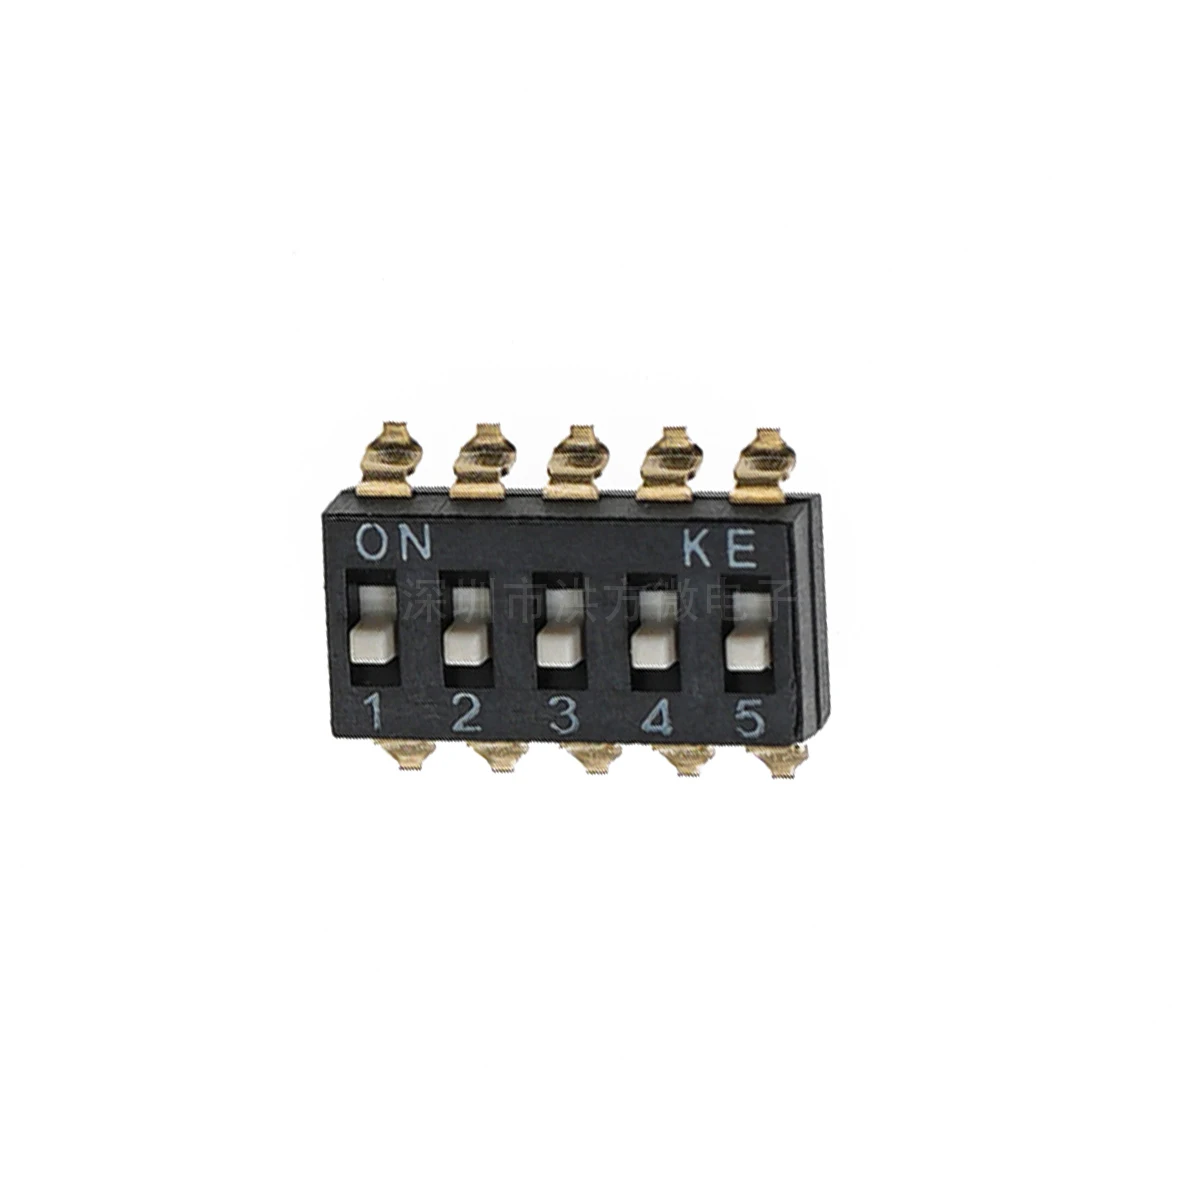 

KINGTEK SMD SMT dial switch 2.54mm 5-bit KE DSIC05LSGER Slide Type Switch